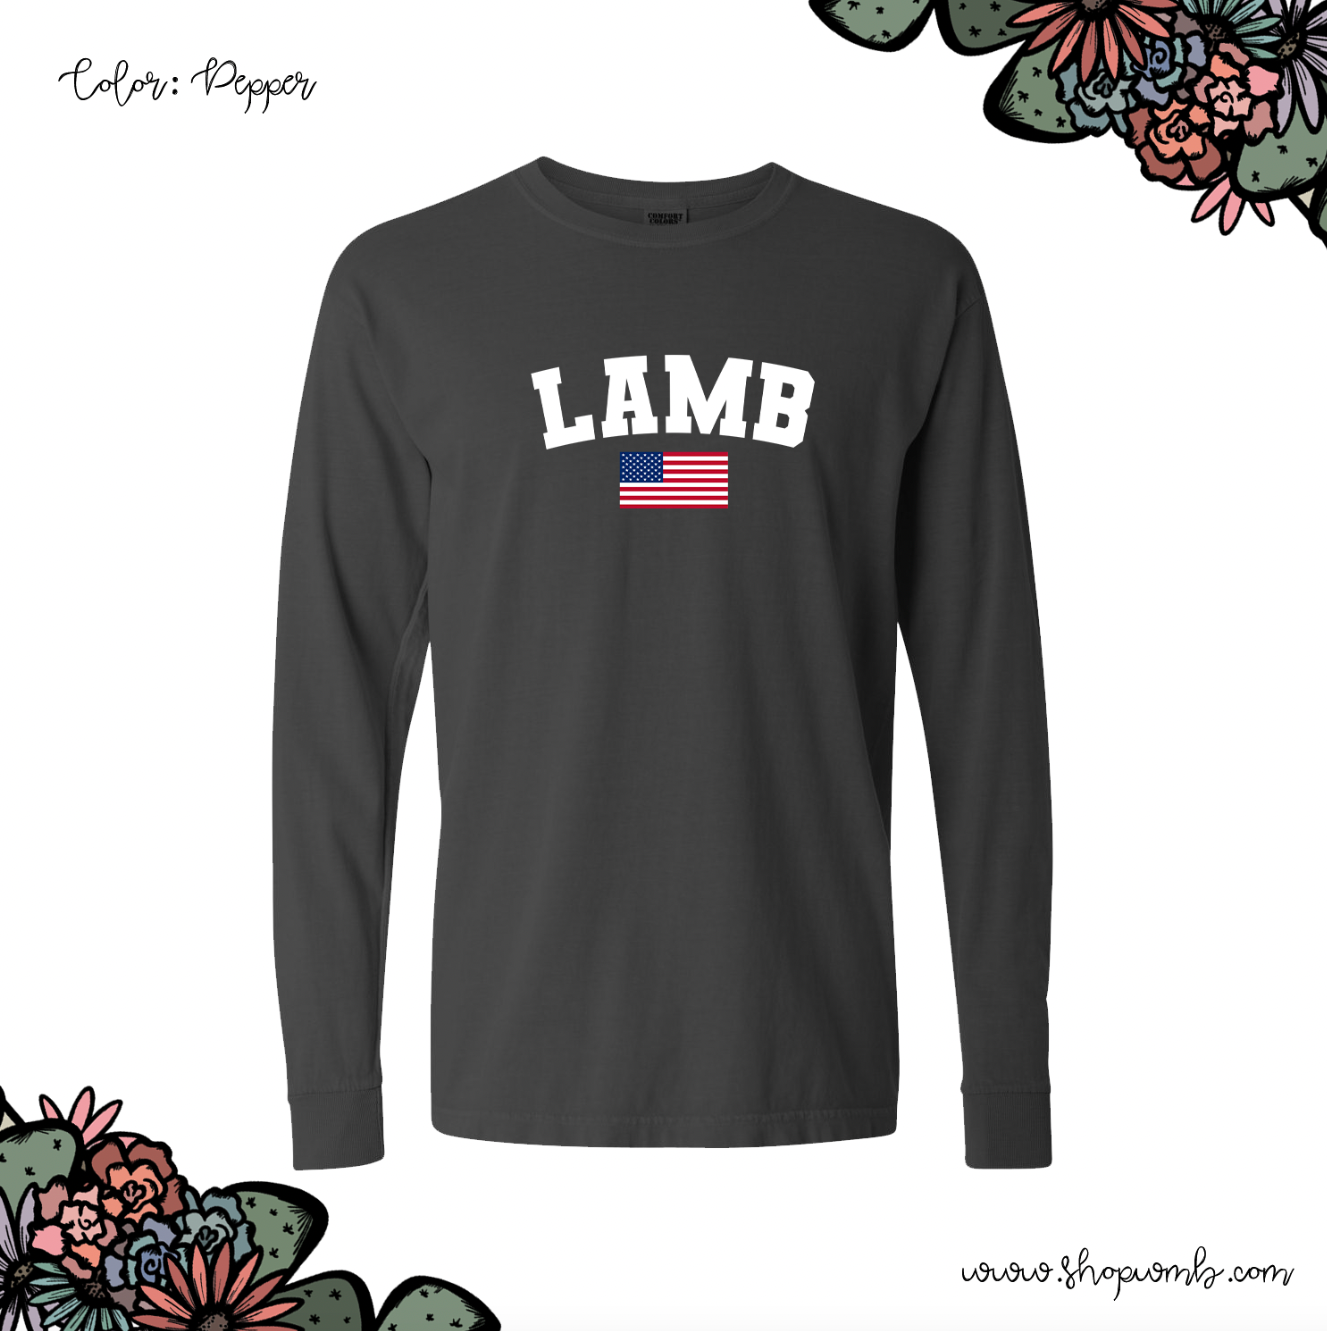 Lamb Flag LONG SLEEVE T-Shirt (S-3XL) - Multiple Colors!